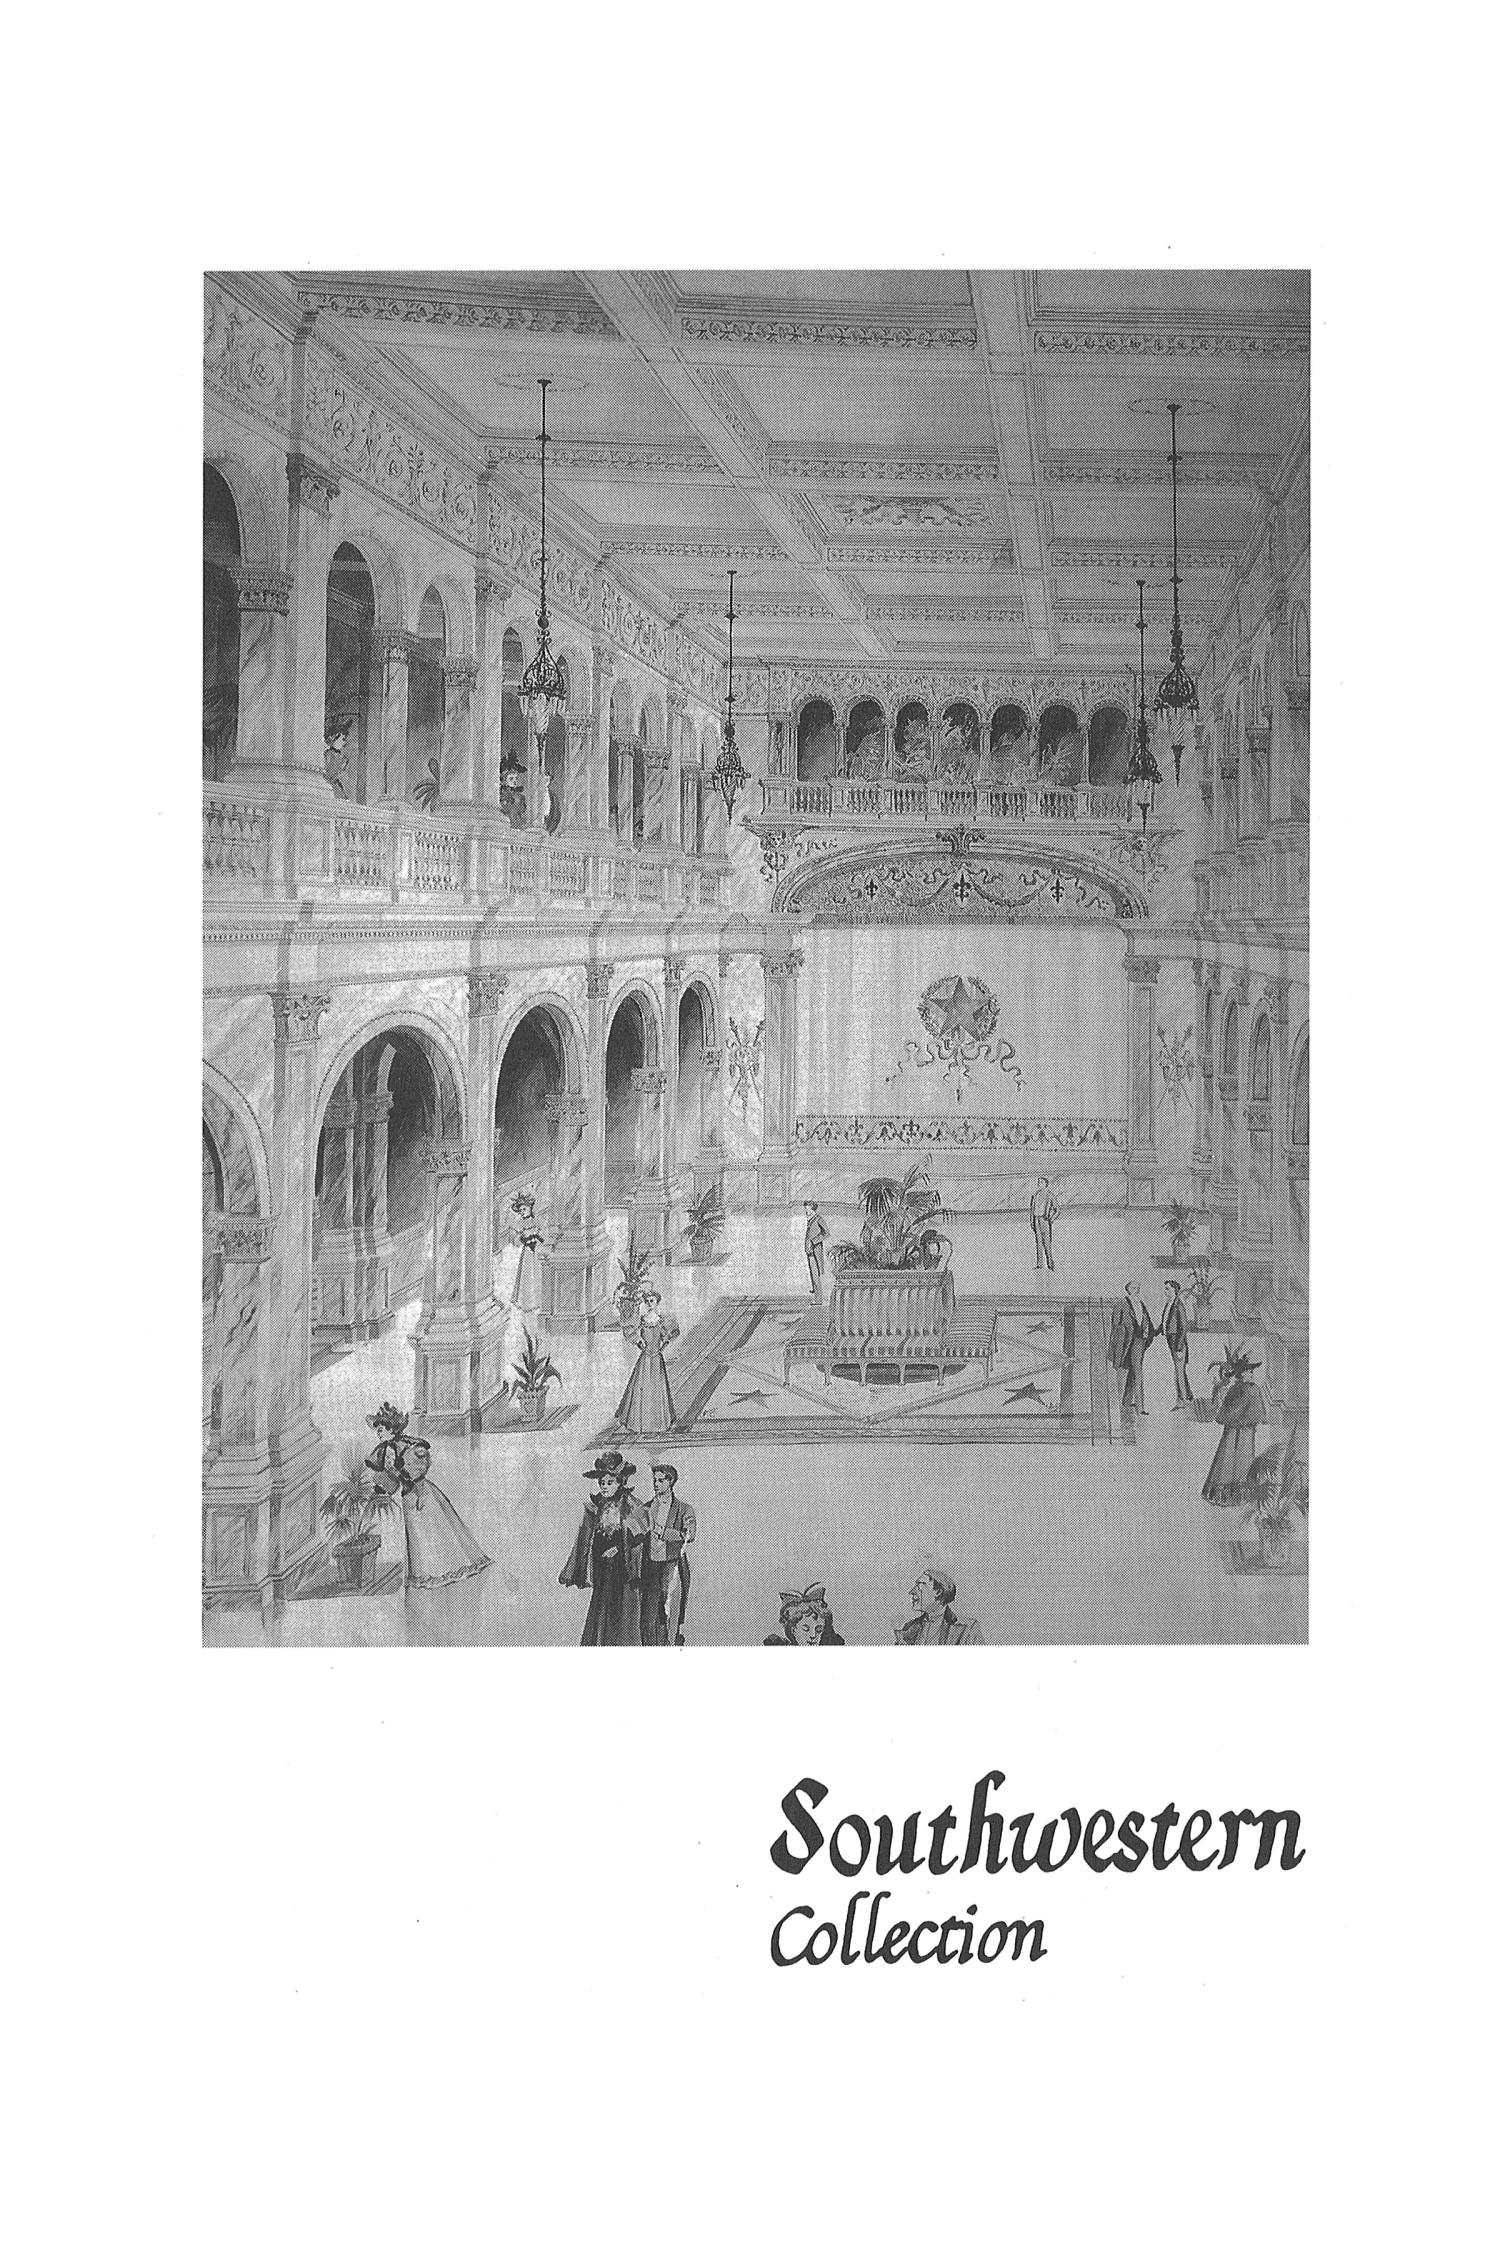 The Southwestern Historical Quarterly, Volume 98, July 1994 - April, 1995
                                                
                                                    103
                                                